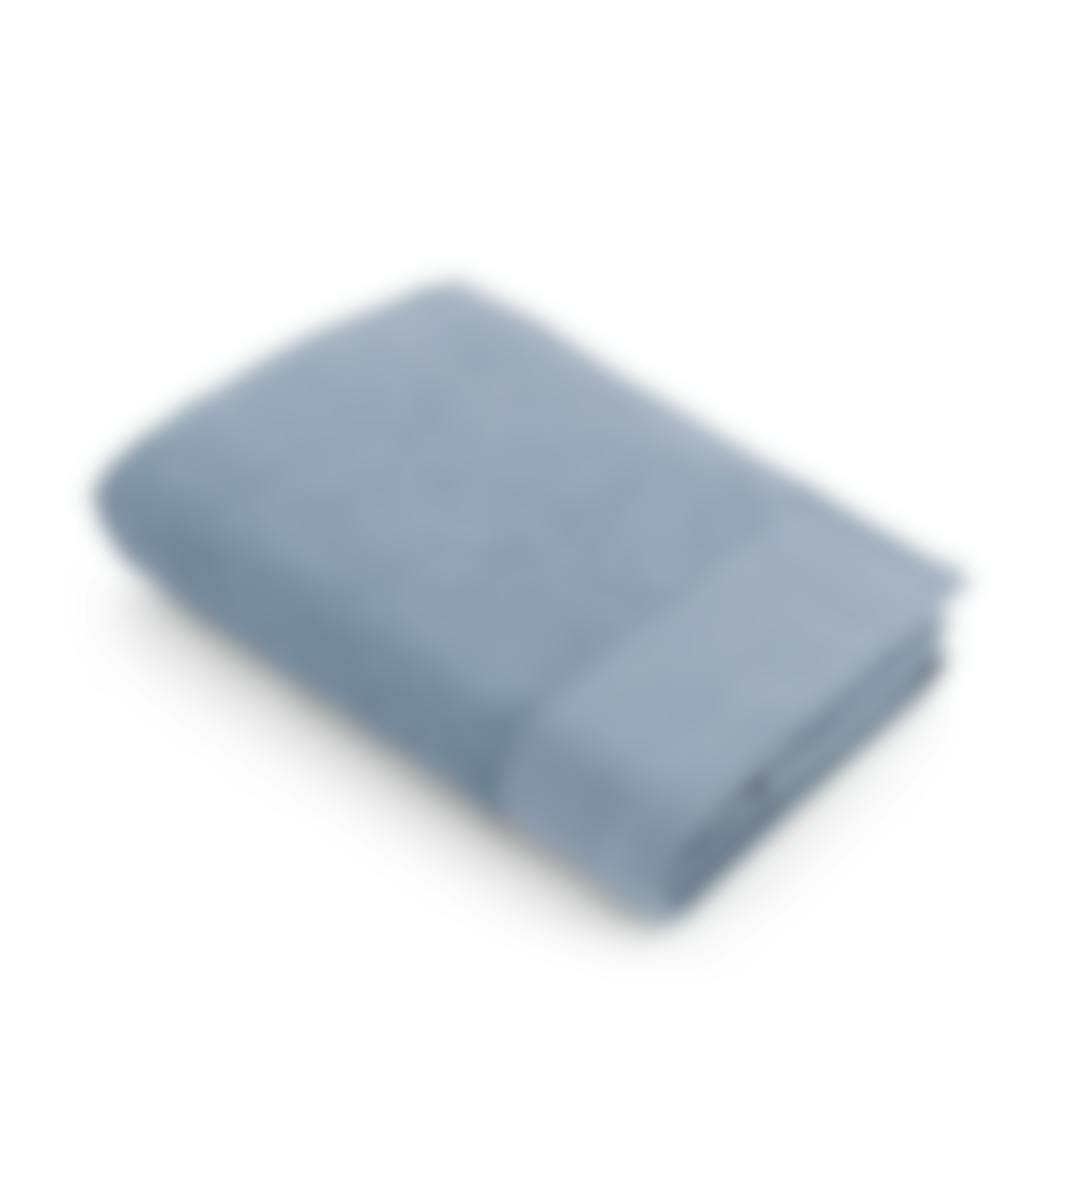 Walra drap de bain Soft Cotton bleu 70 x 140 cm